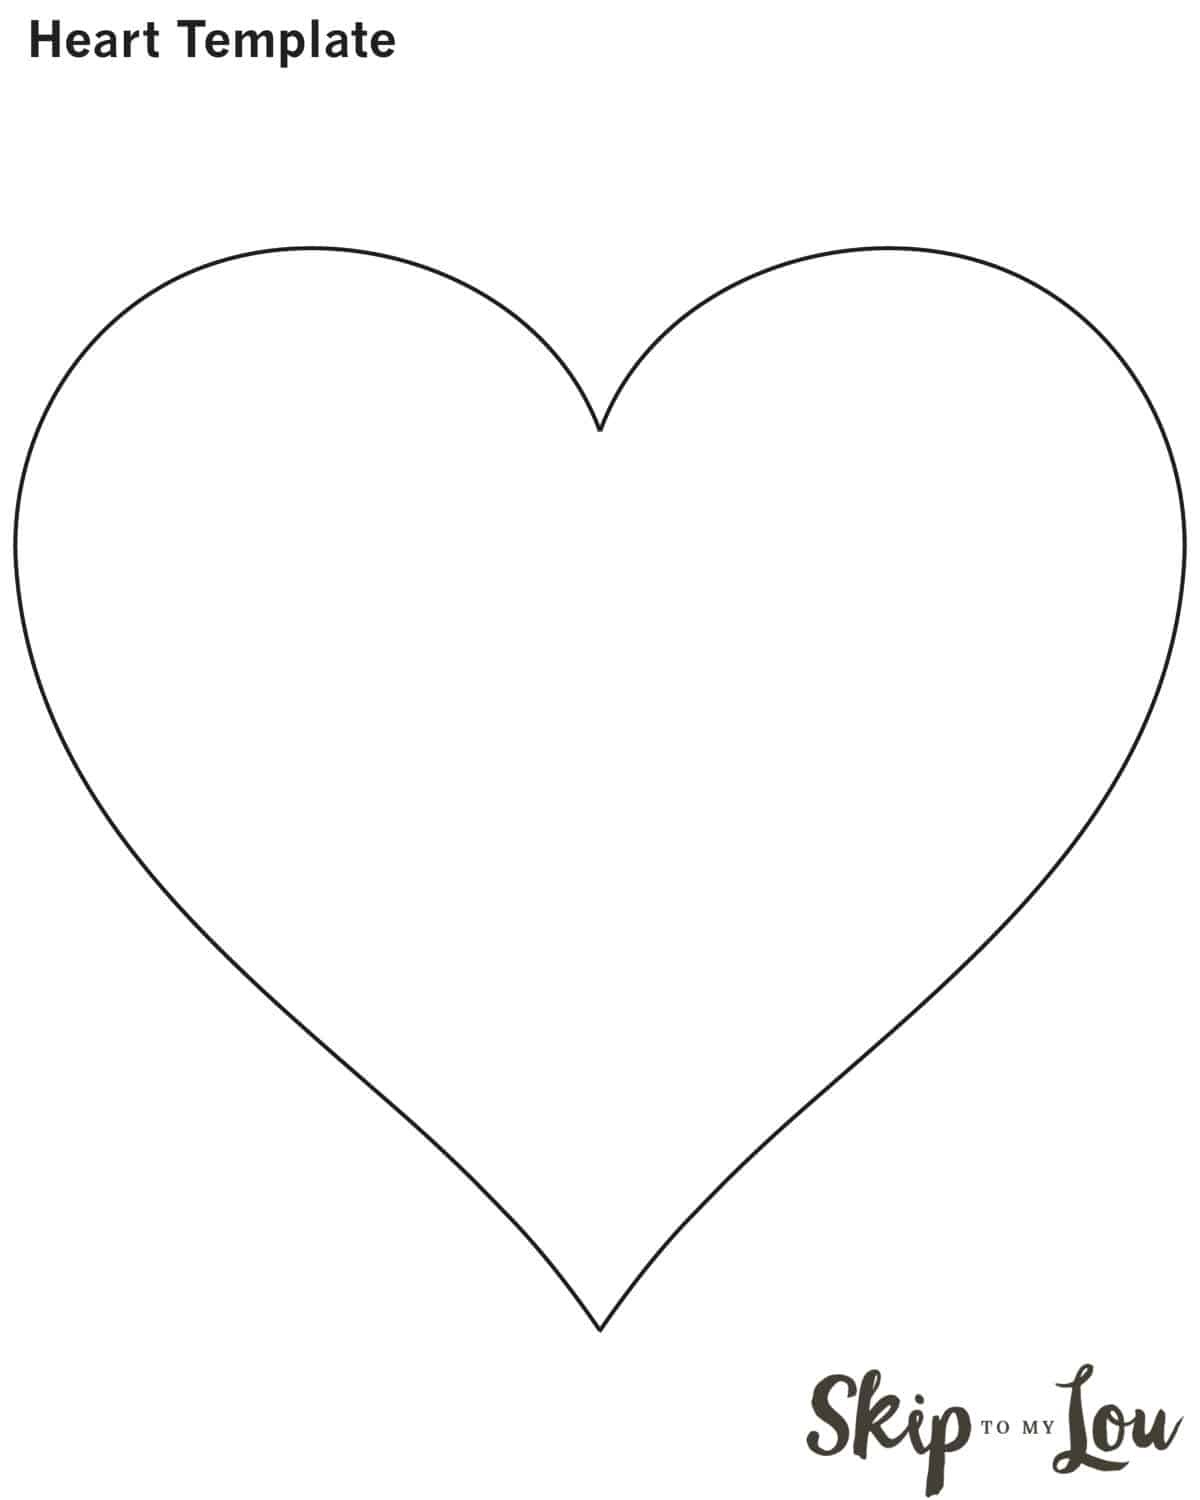 Valentine Heart Attack Idea With Free Printable Heart Template - Free Printable Valentine Heart Patterns